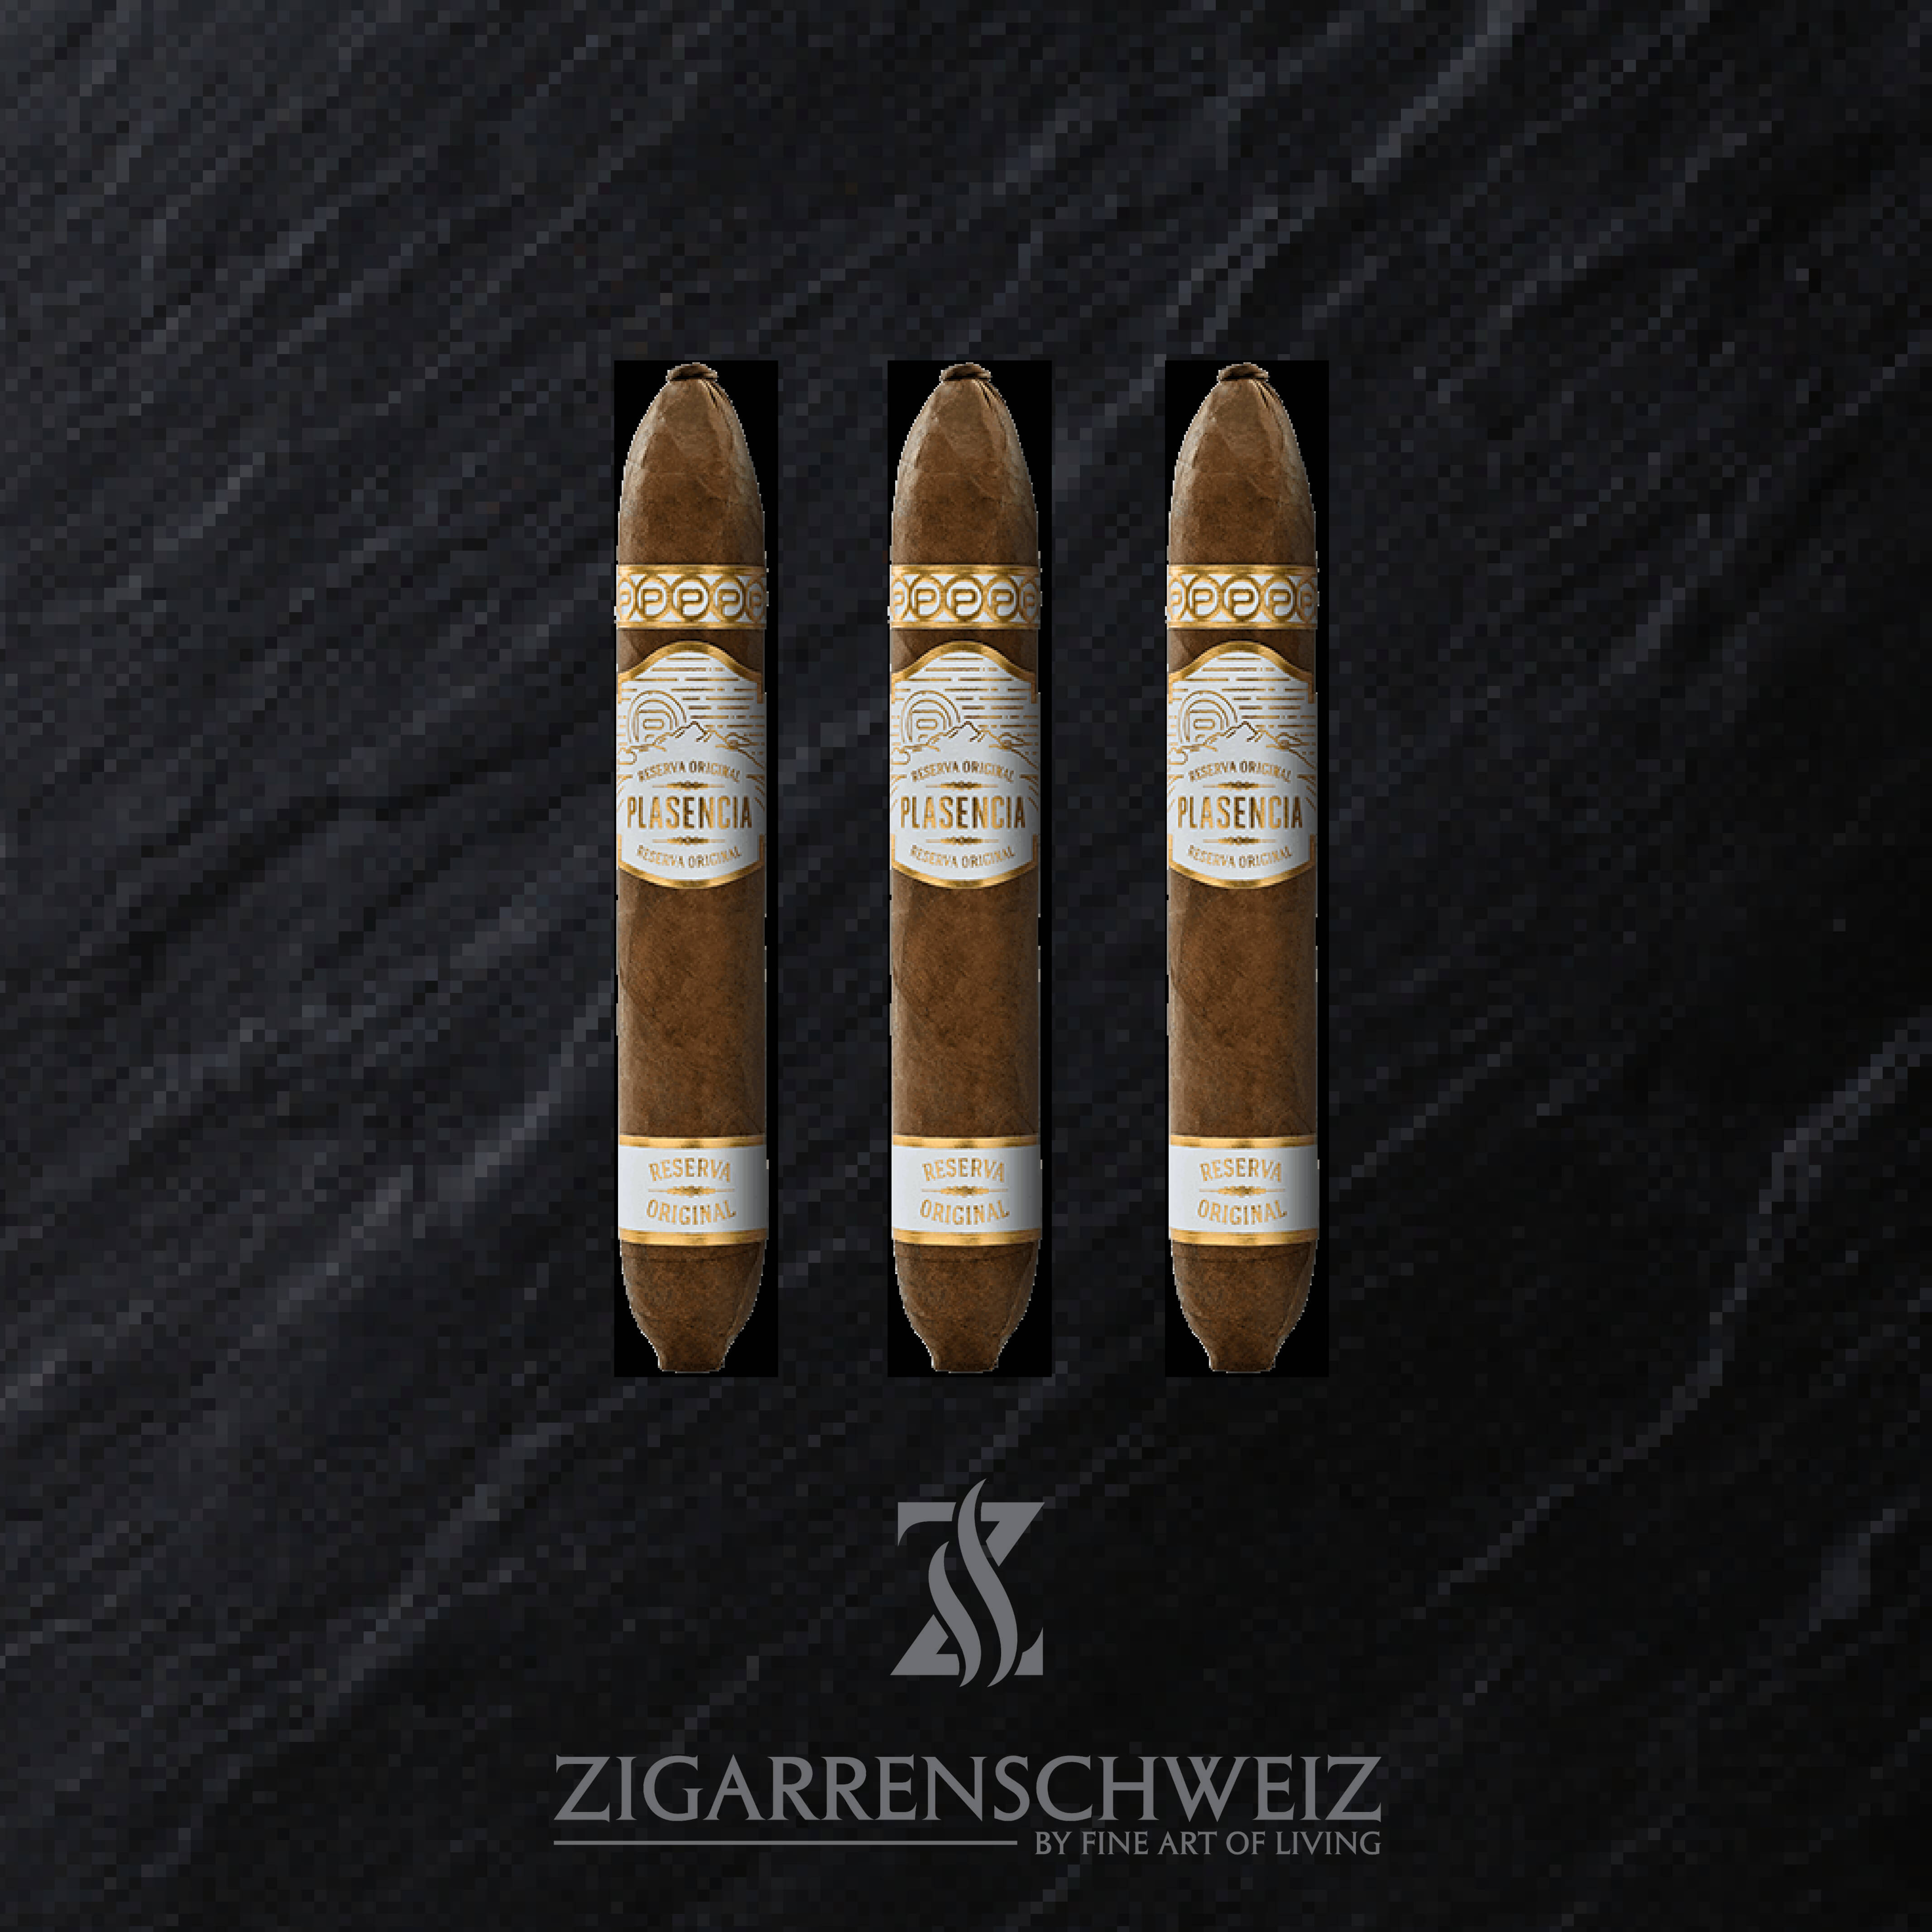 3er Etui Plasencia Reserva Original Cortes Zigarren im Figurado Format